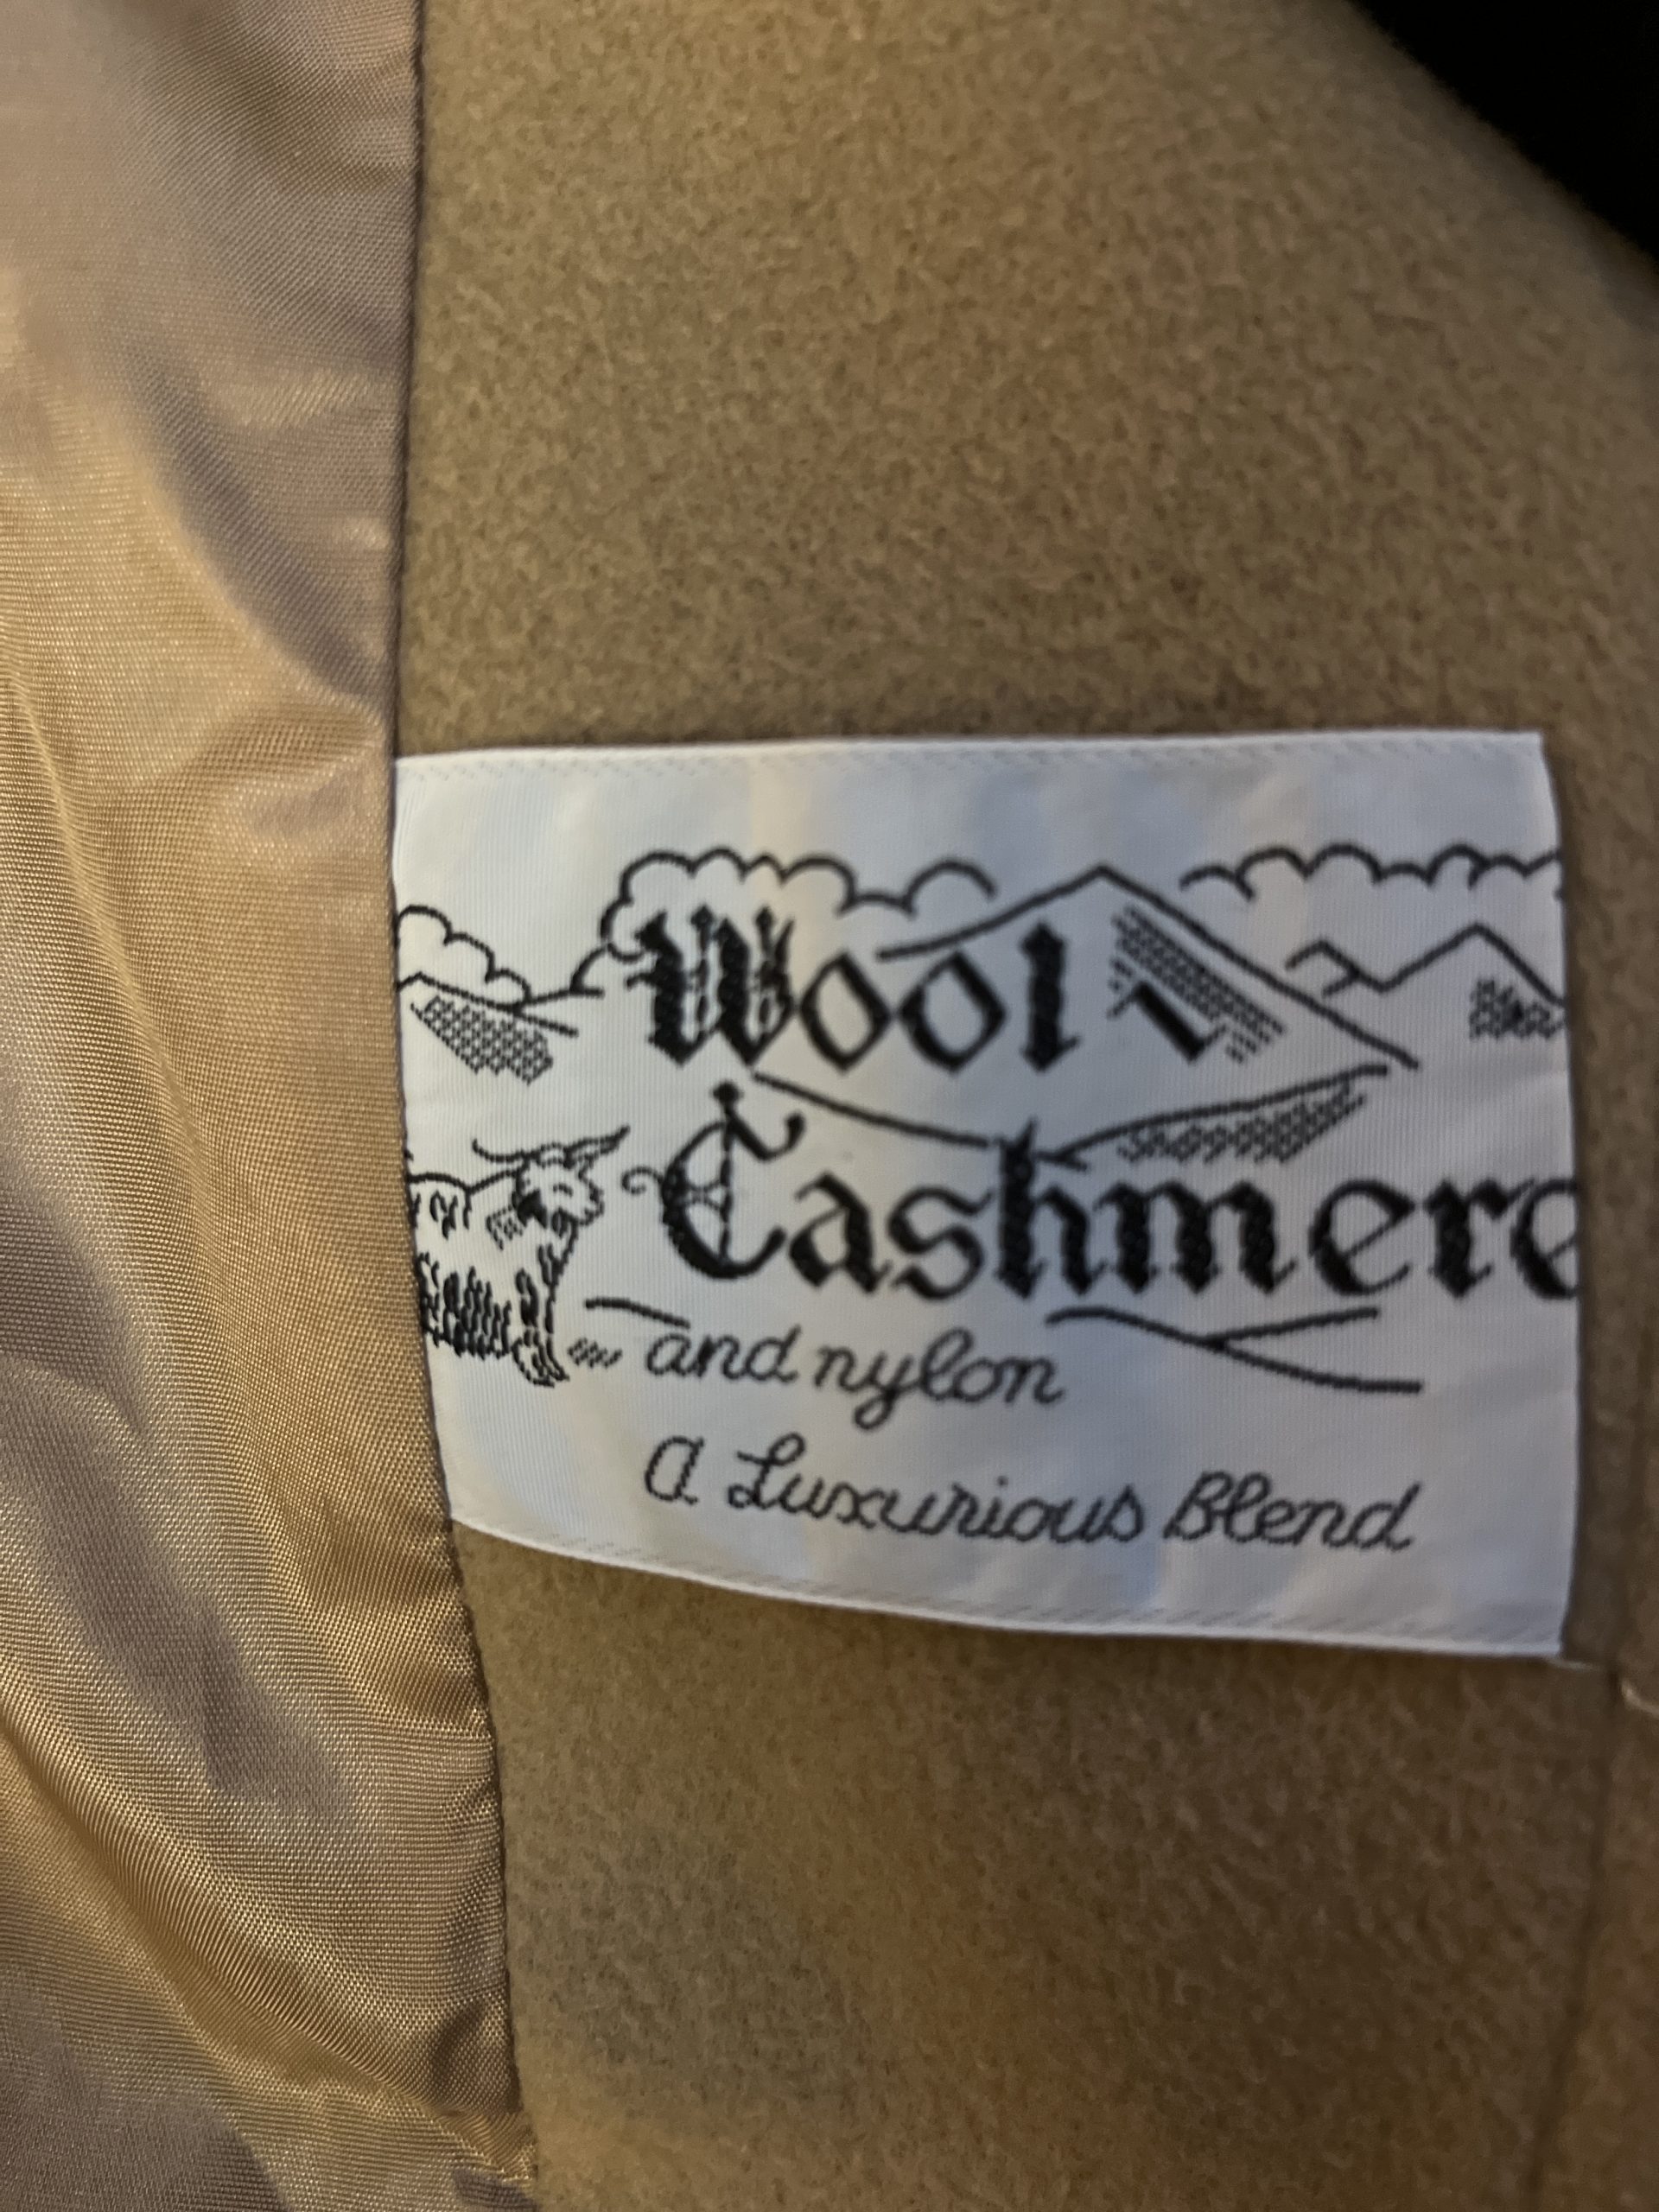 Vintage Mansfield Cashmere Coat - I LOVE YOUR JACKET!